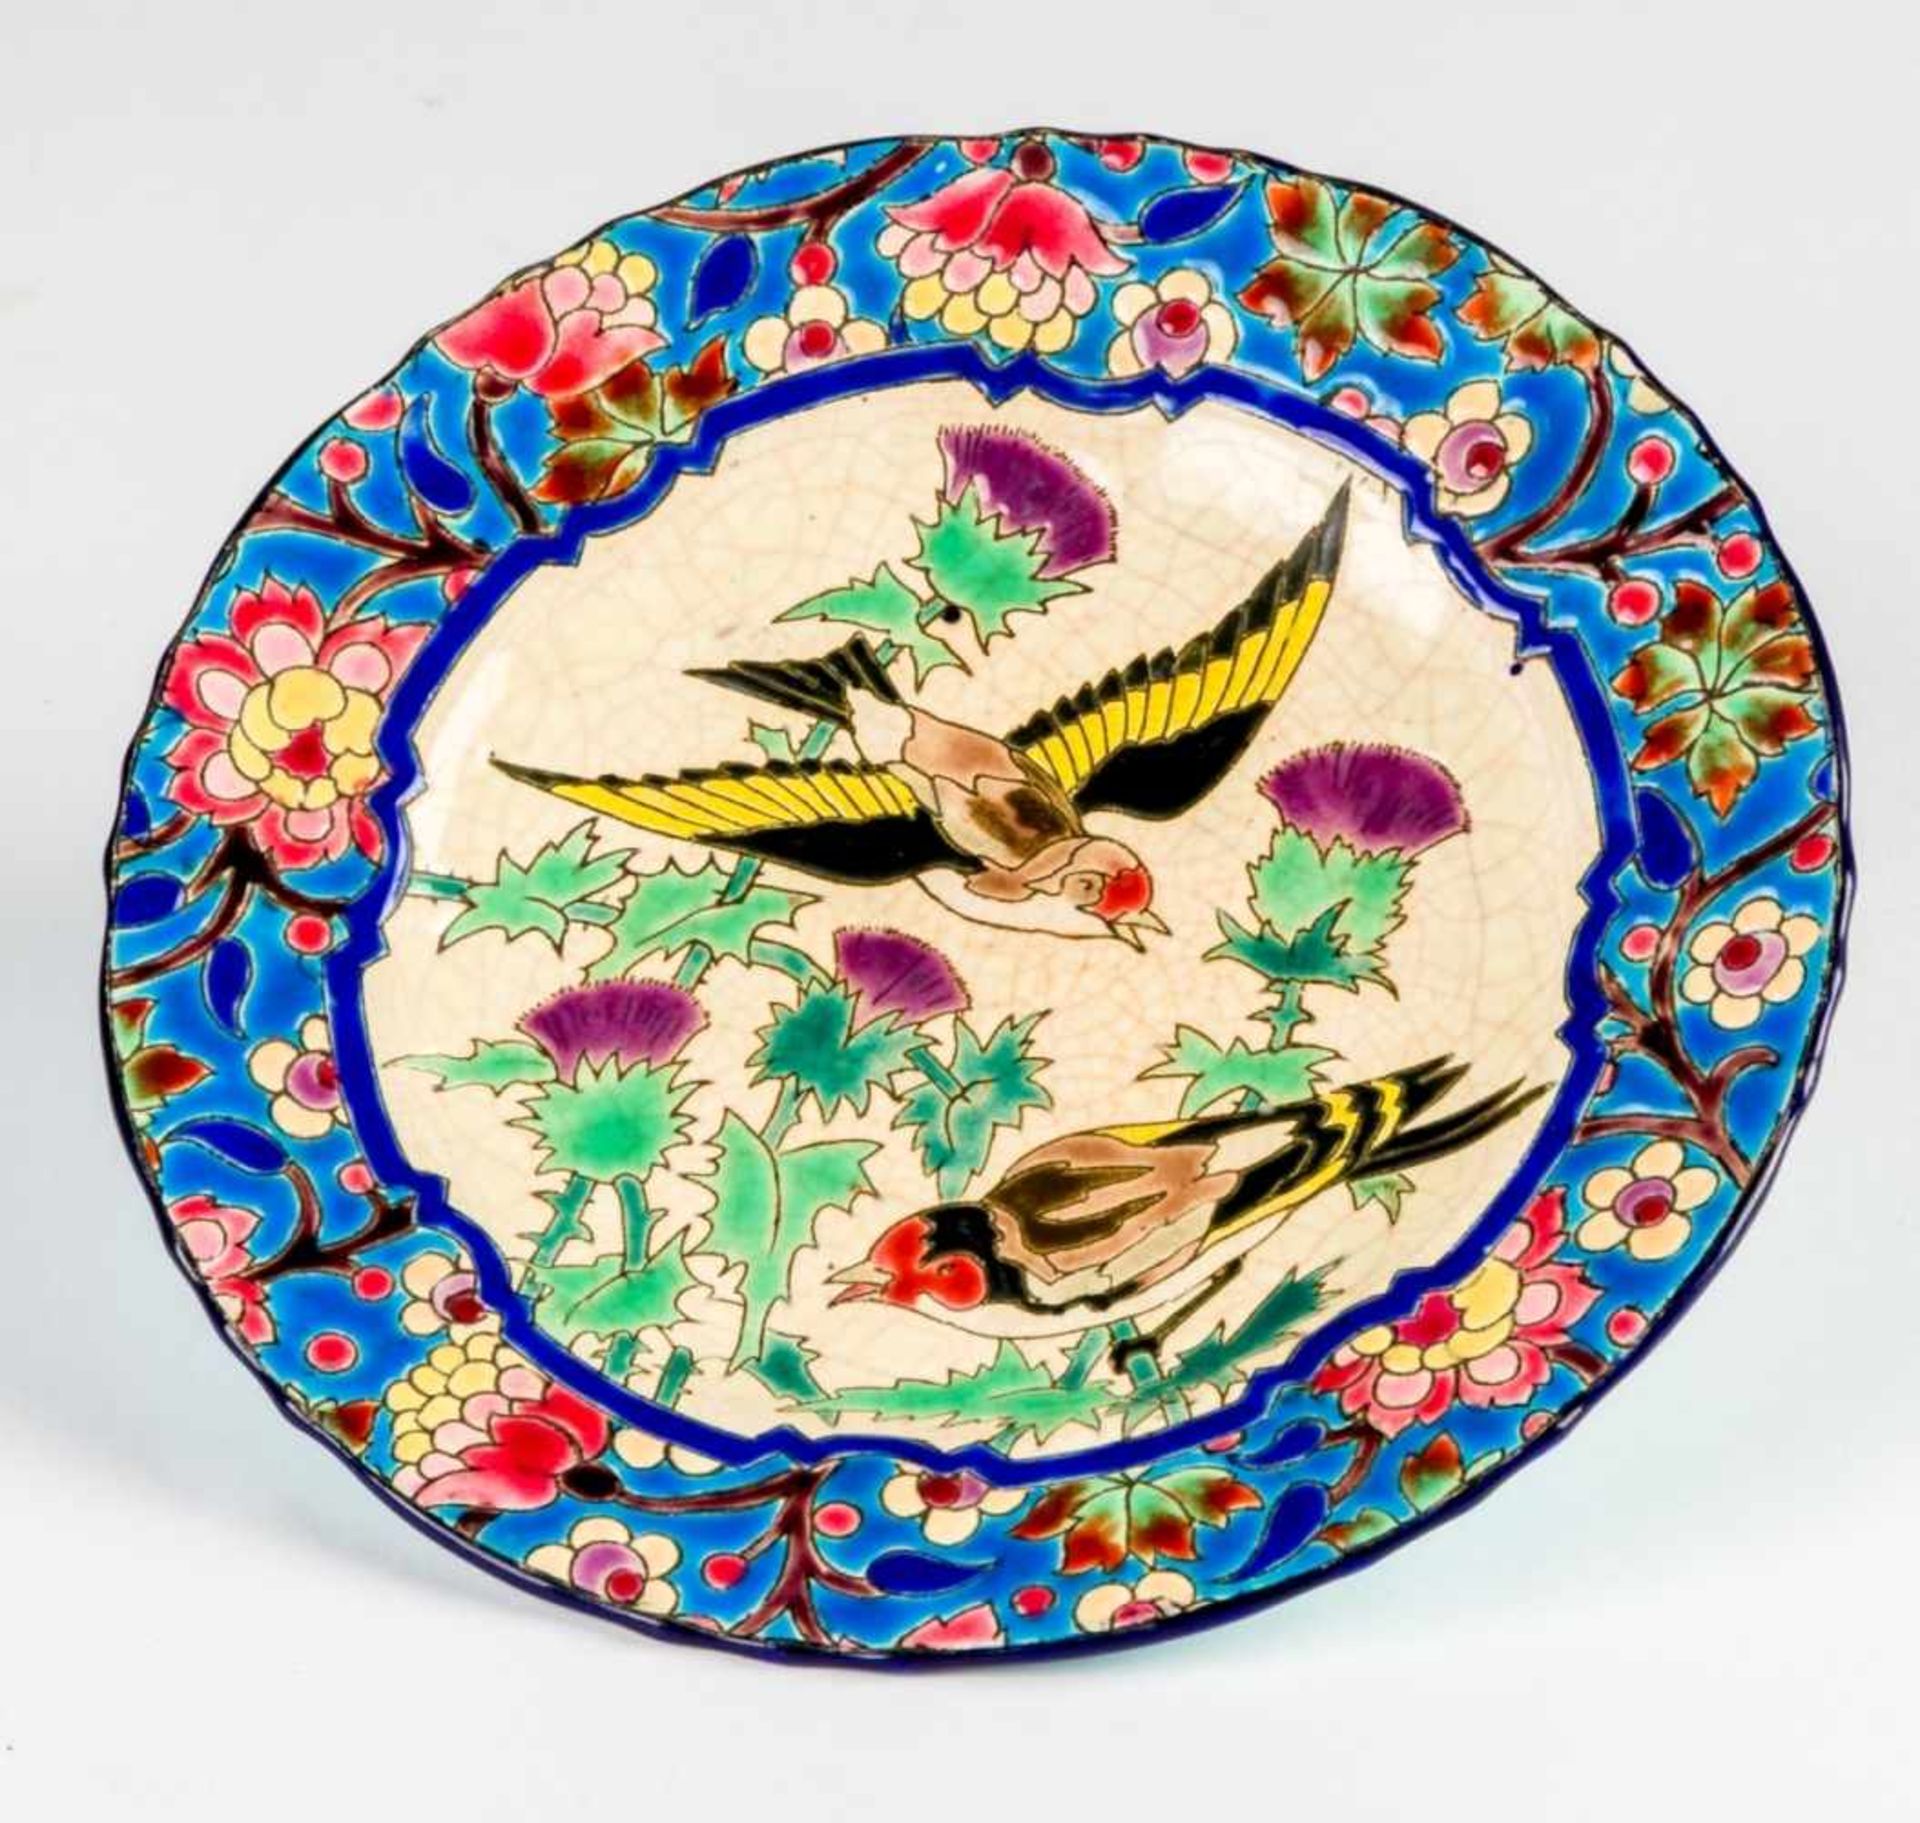 Emaux de Longwy. France: Plate, circa 1930-40. Ceramics. Polychrome enamel decoration withflowers